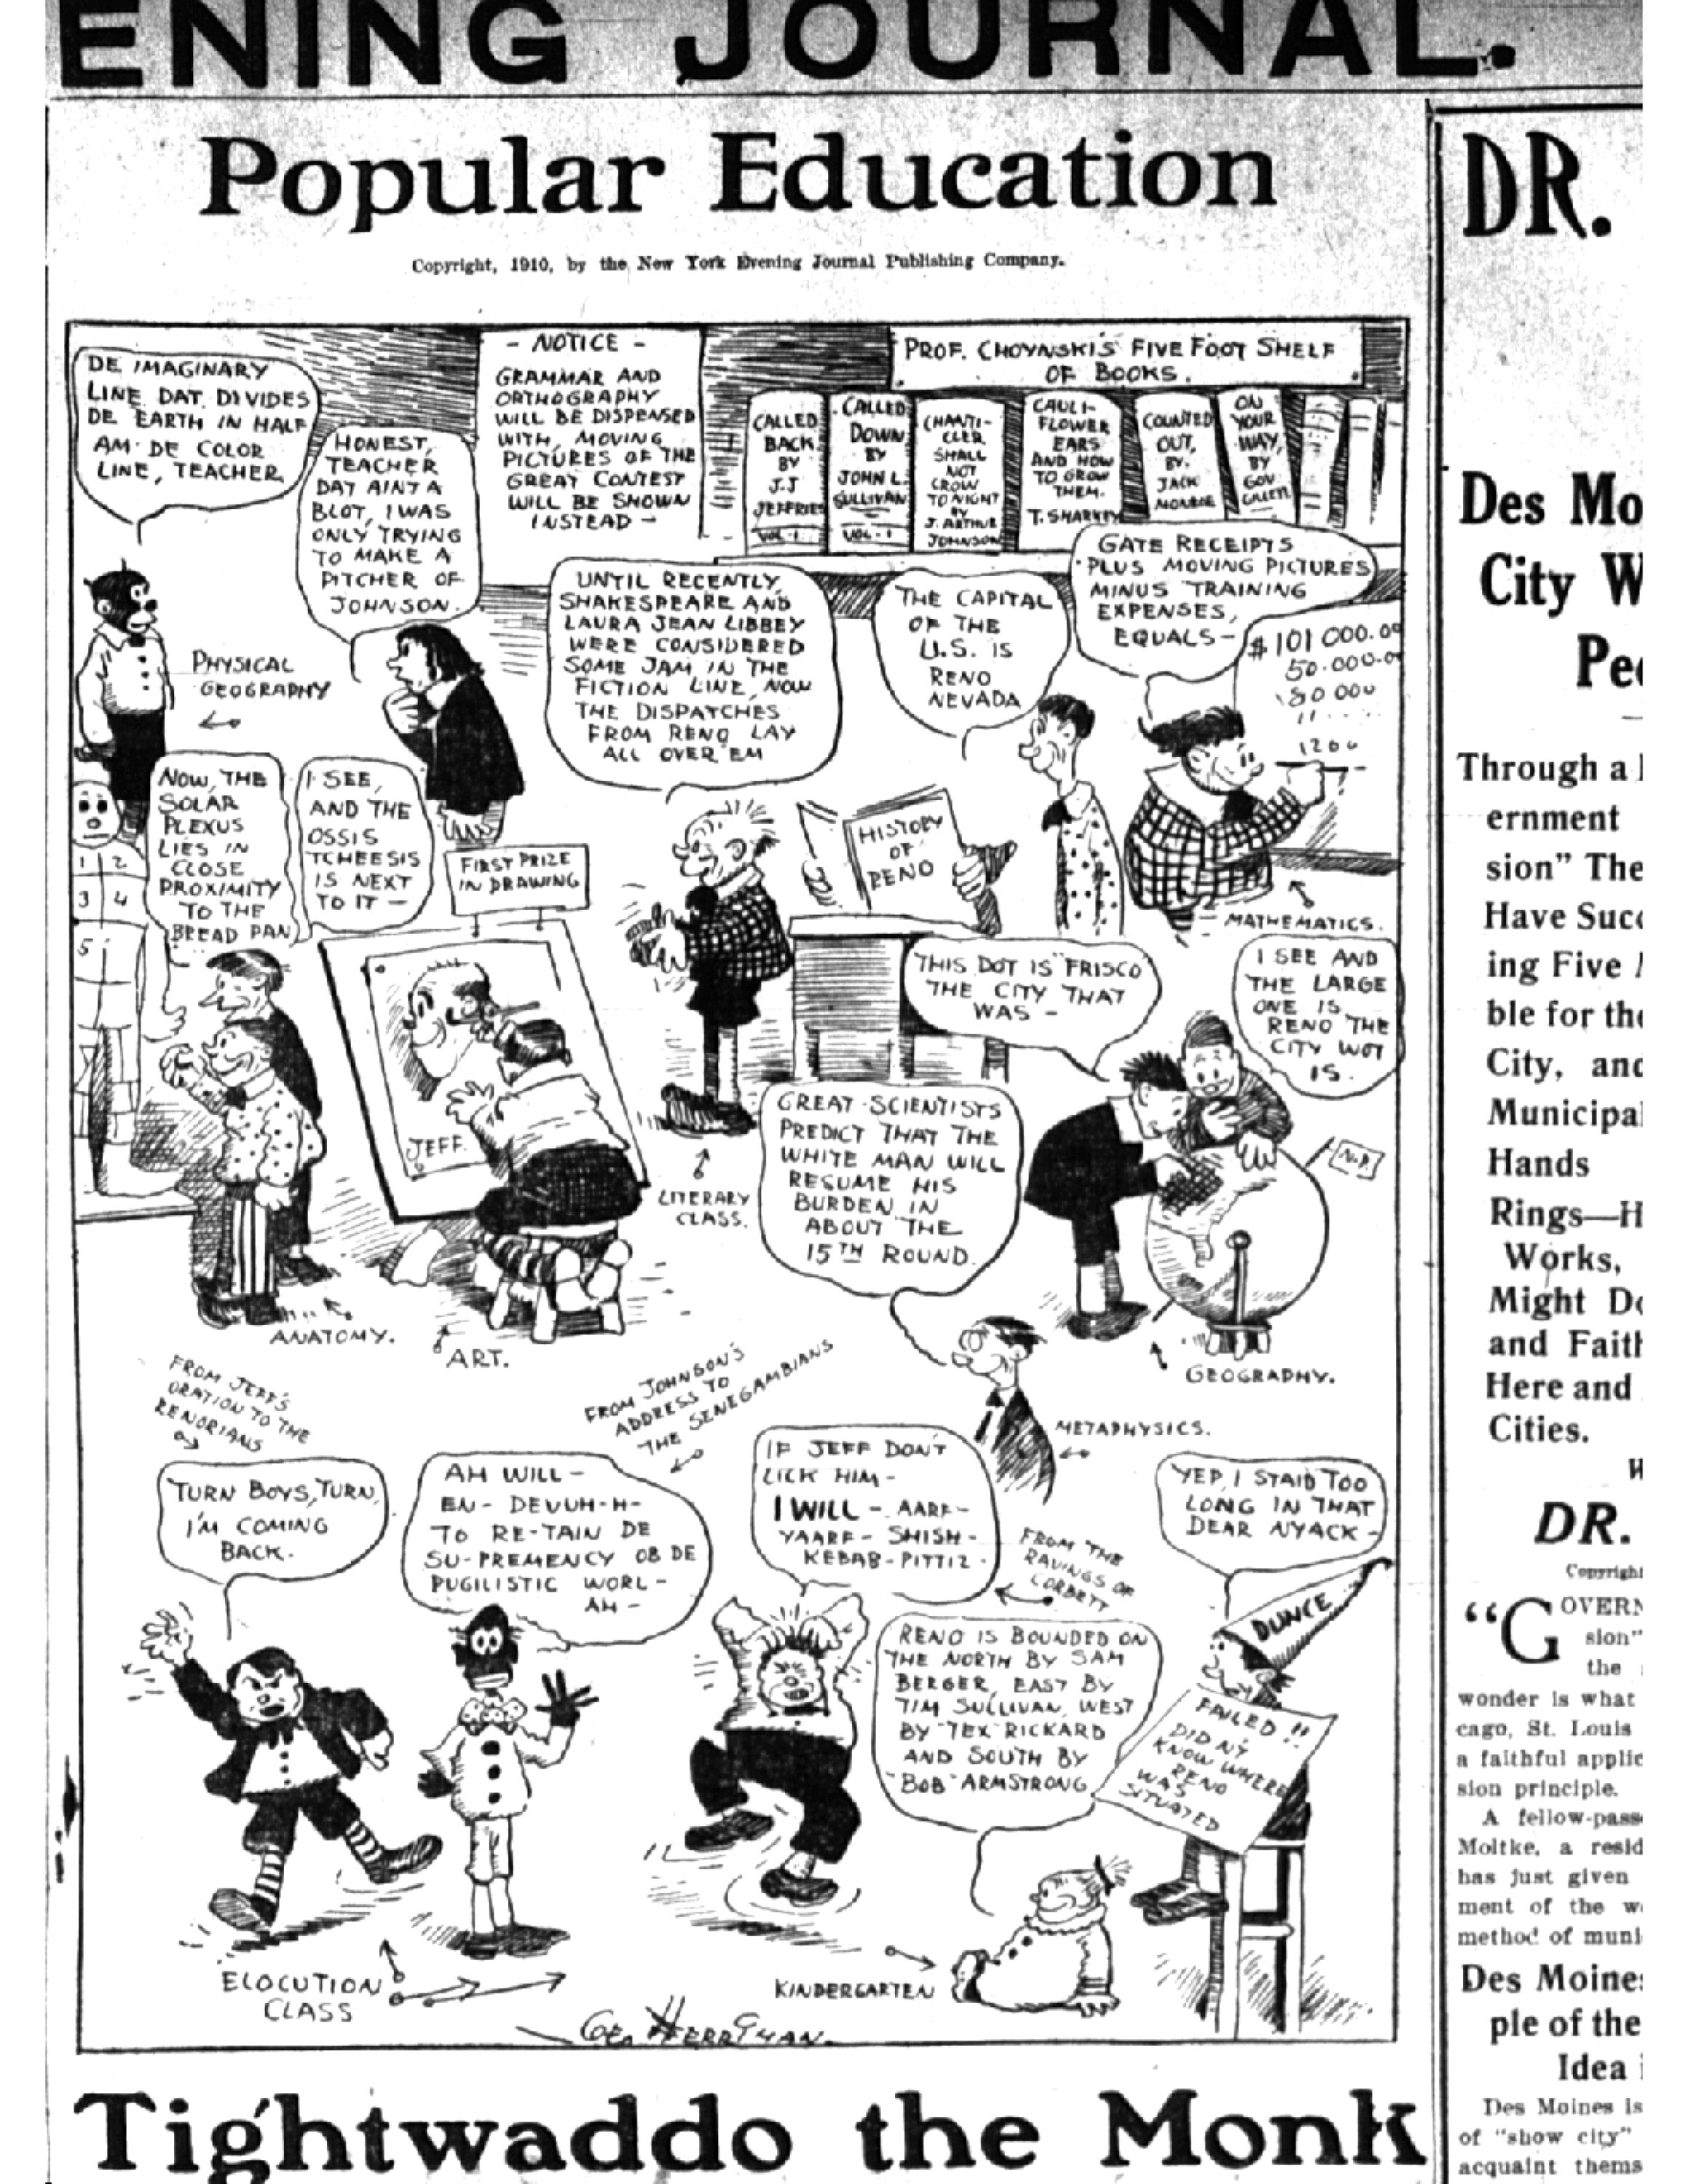 11-nyej-06-27-1910-herriman-cartoon-on-jeffries-johnson.jpg